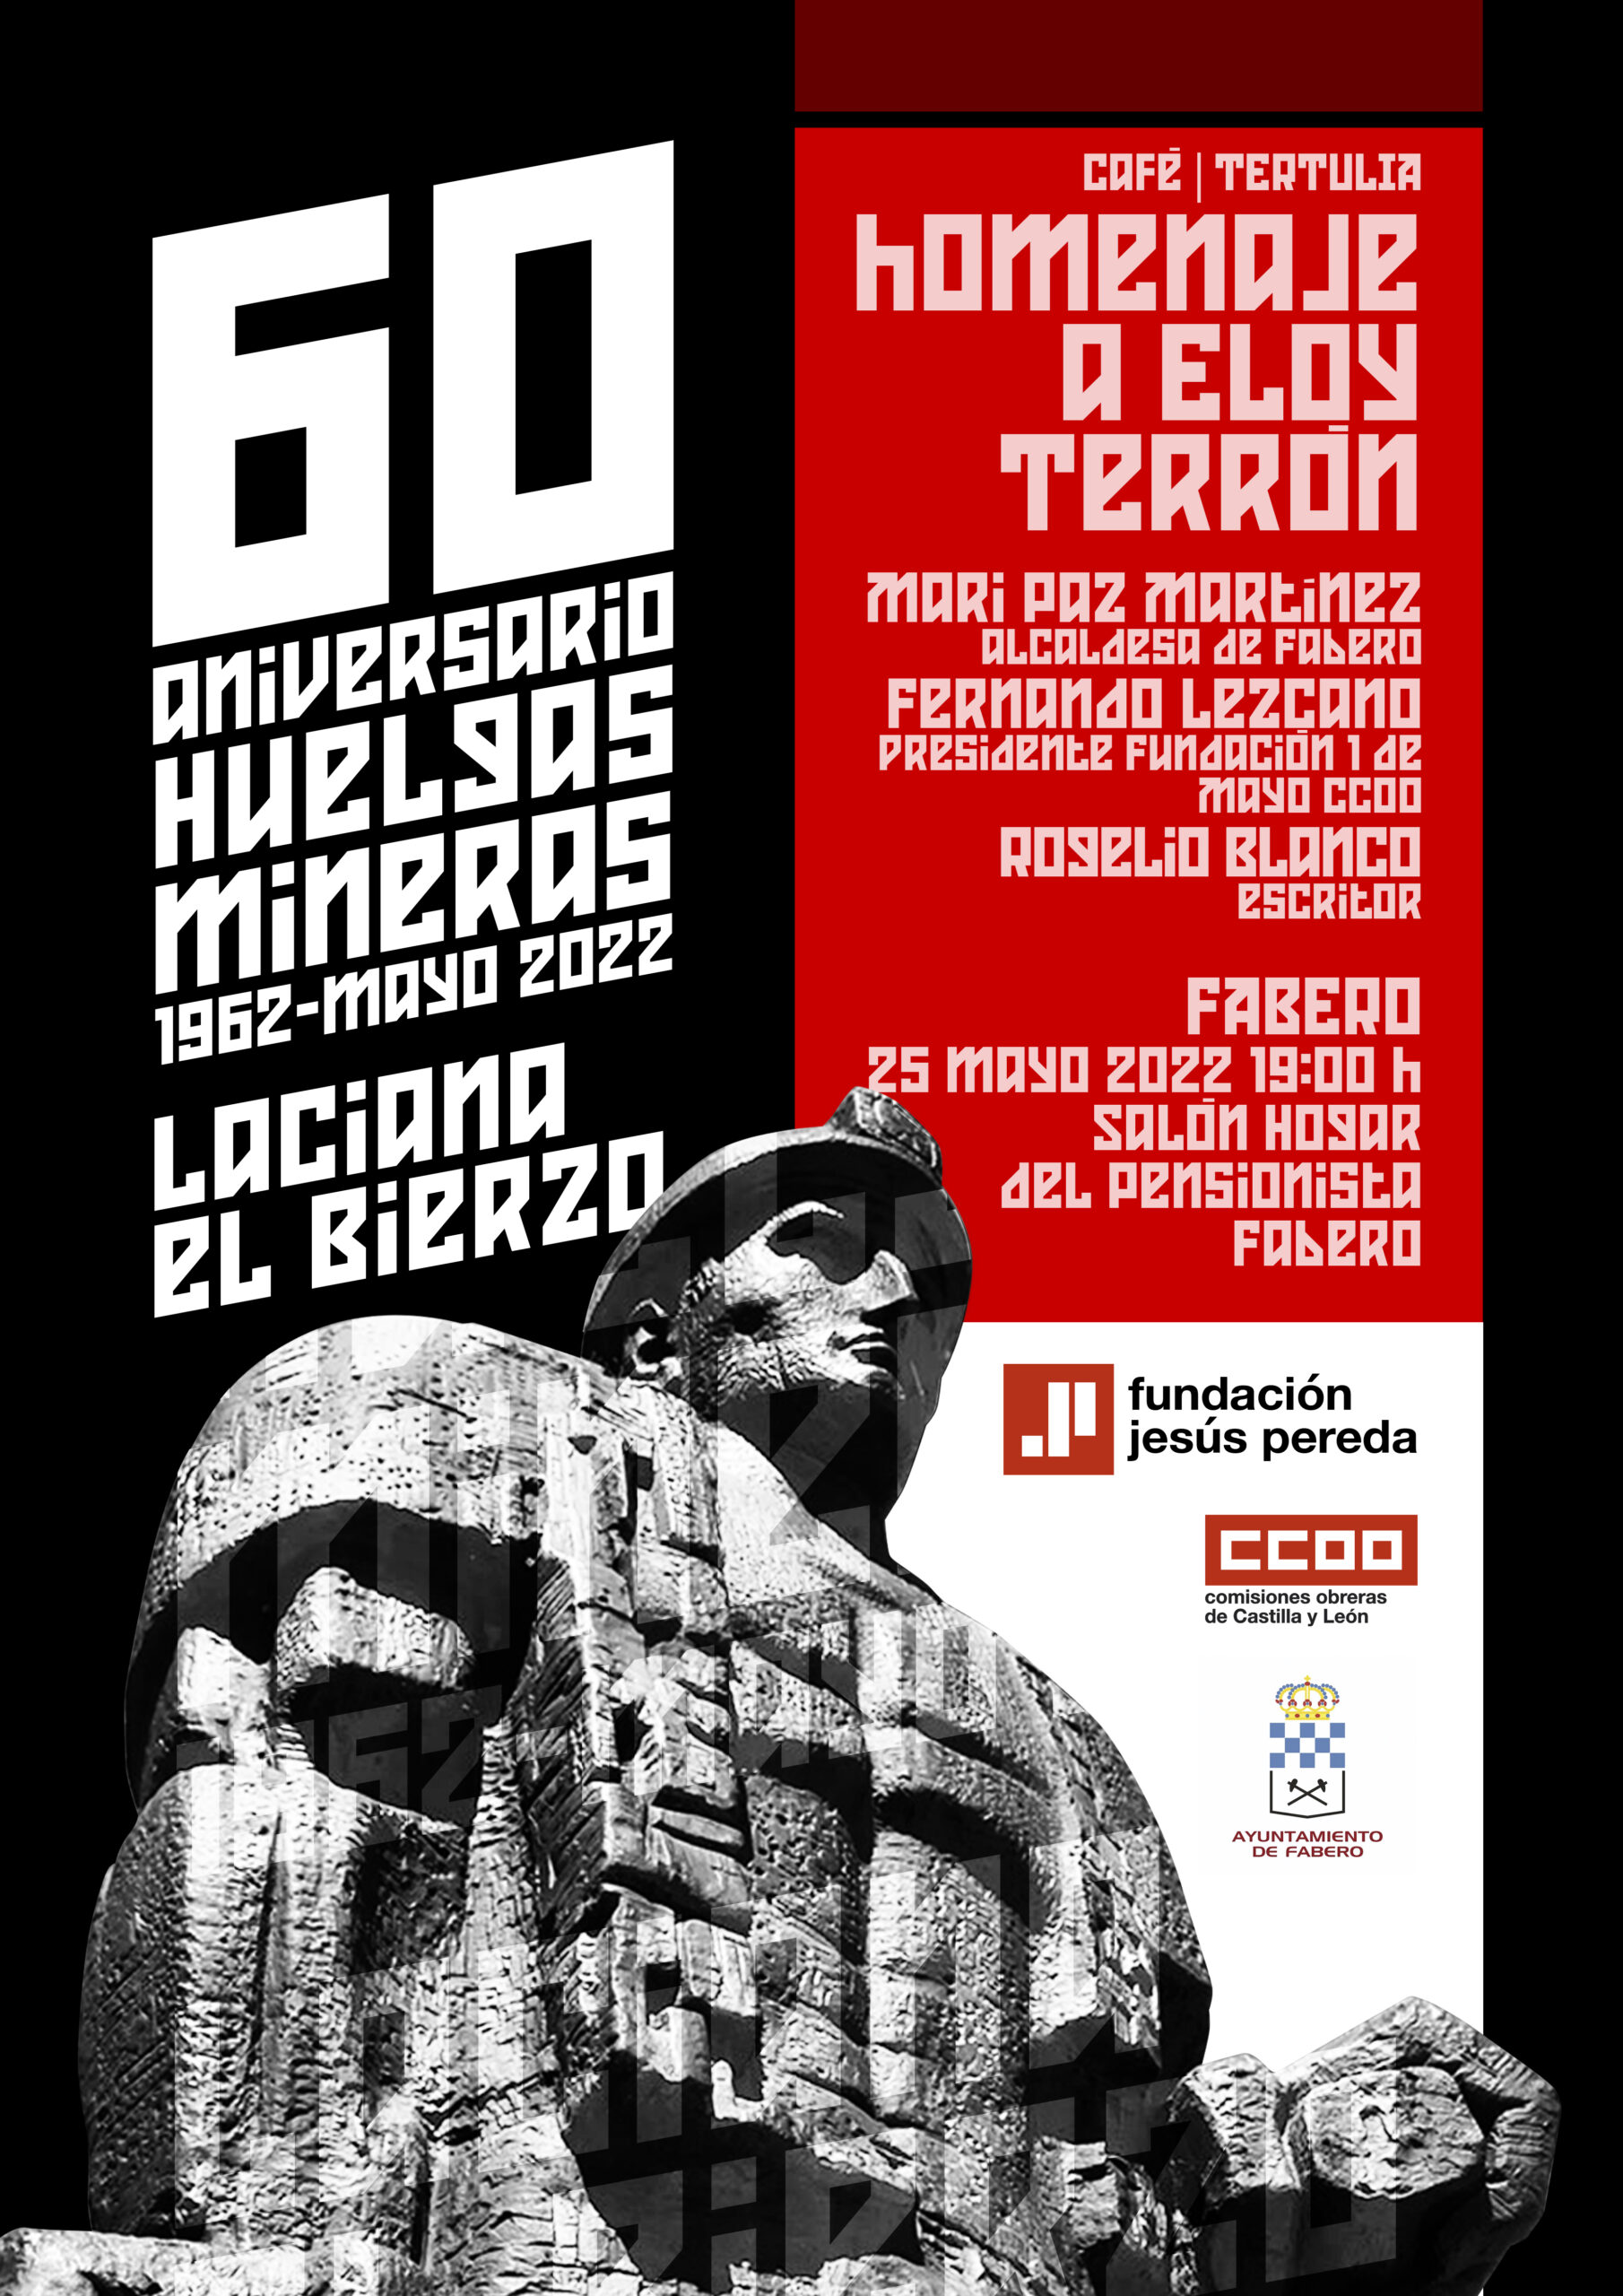 60 Aniversario Huelgas Mineras: Homenaje Eloy Terrón. 25 mayo FABERP